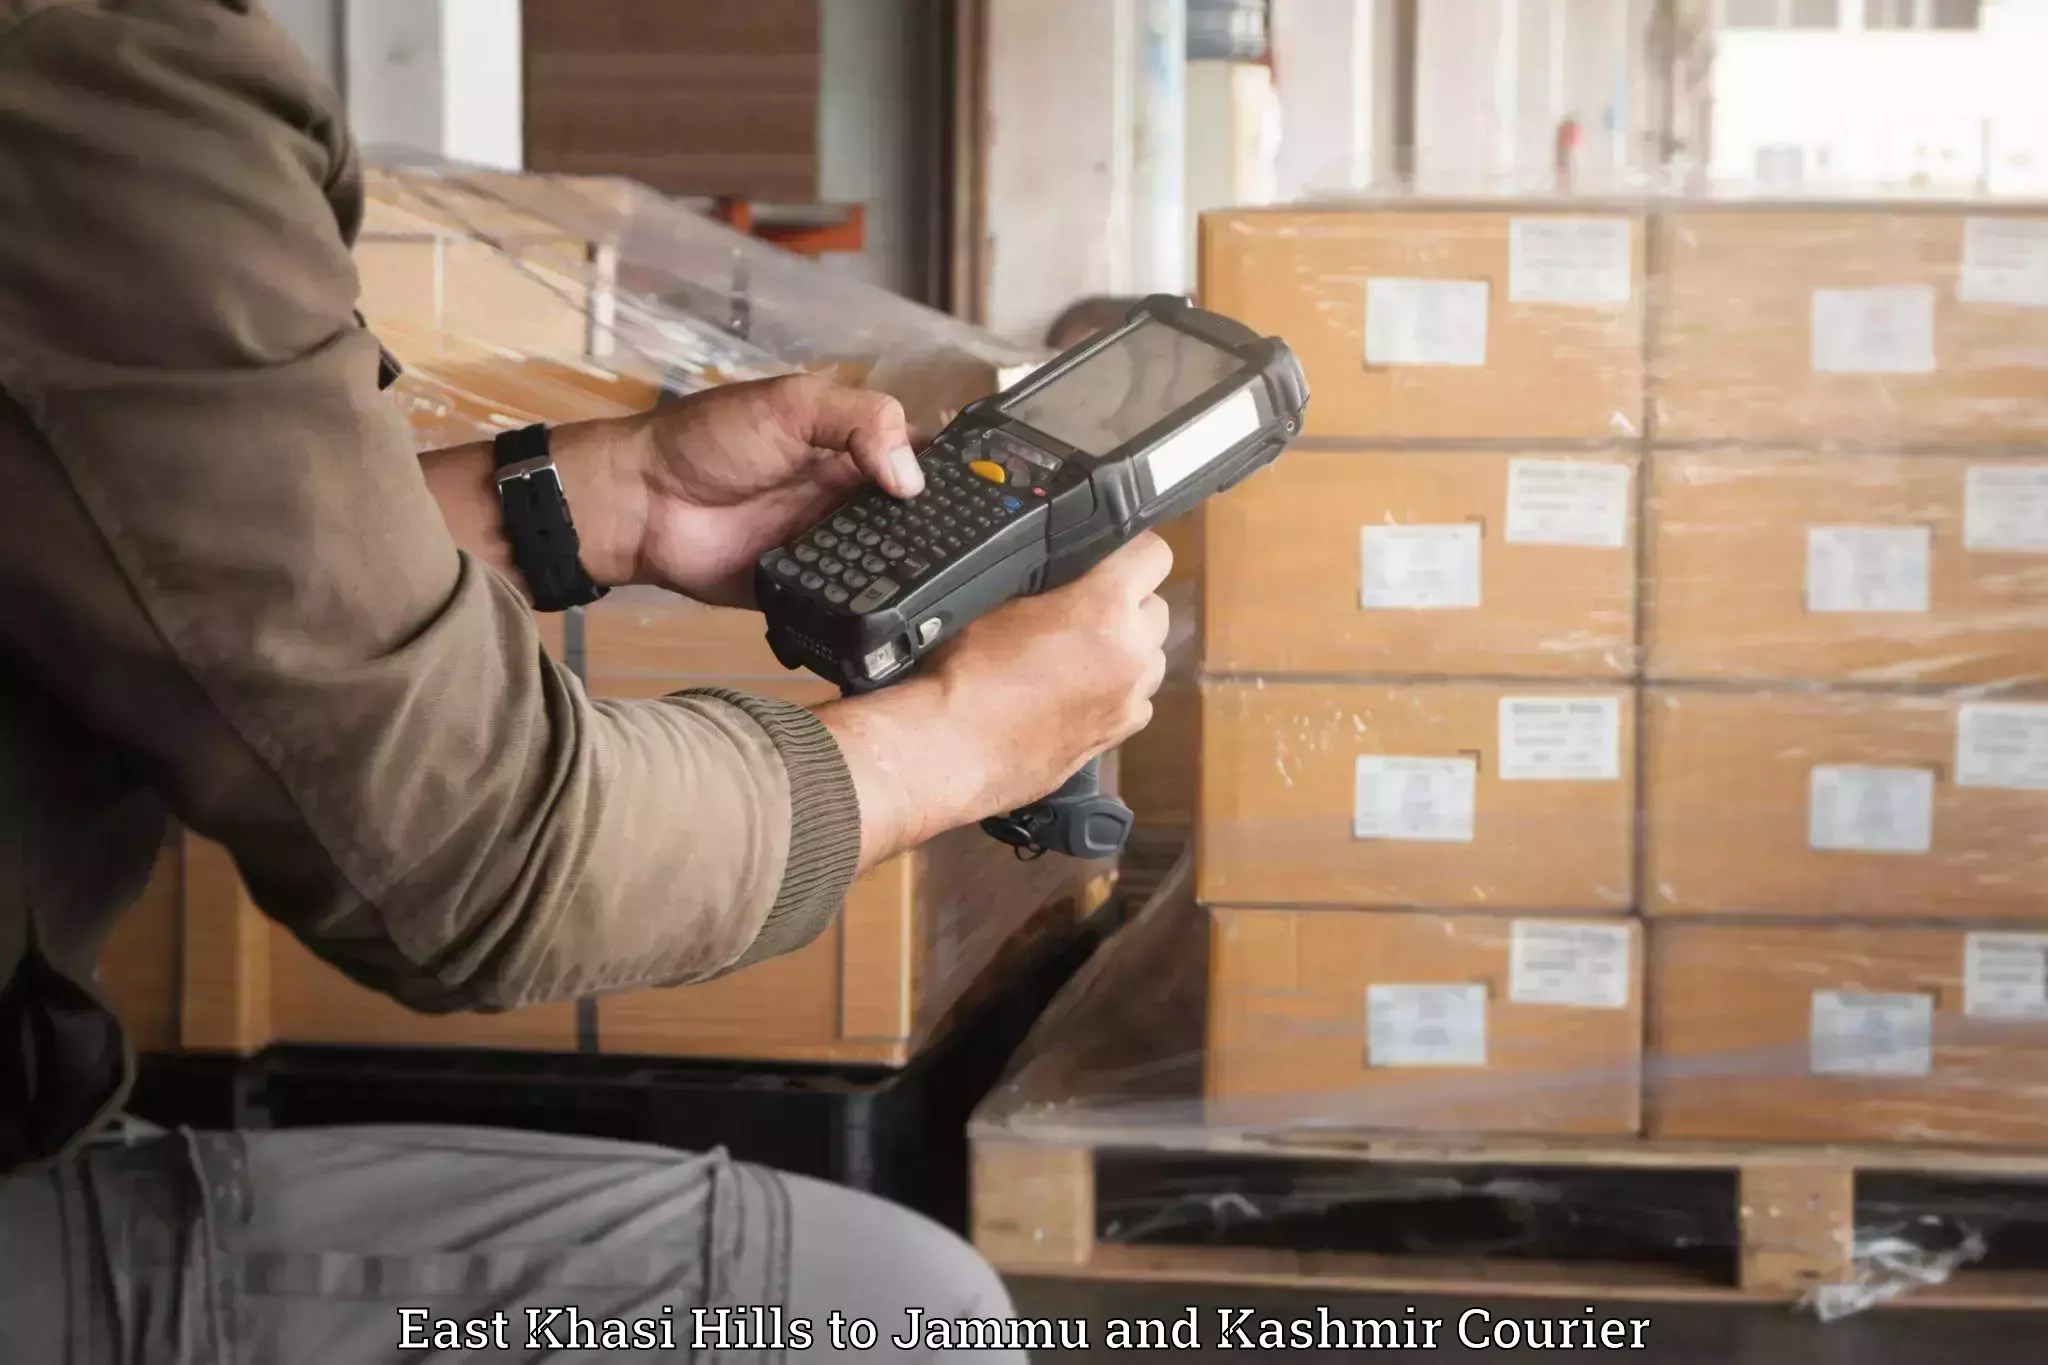 Luggage shipment specialists East Khasi Hills to Jammu and Kashmir